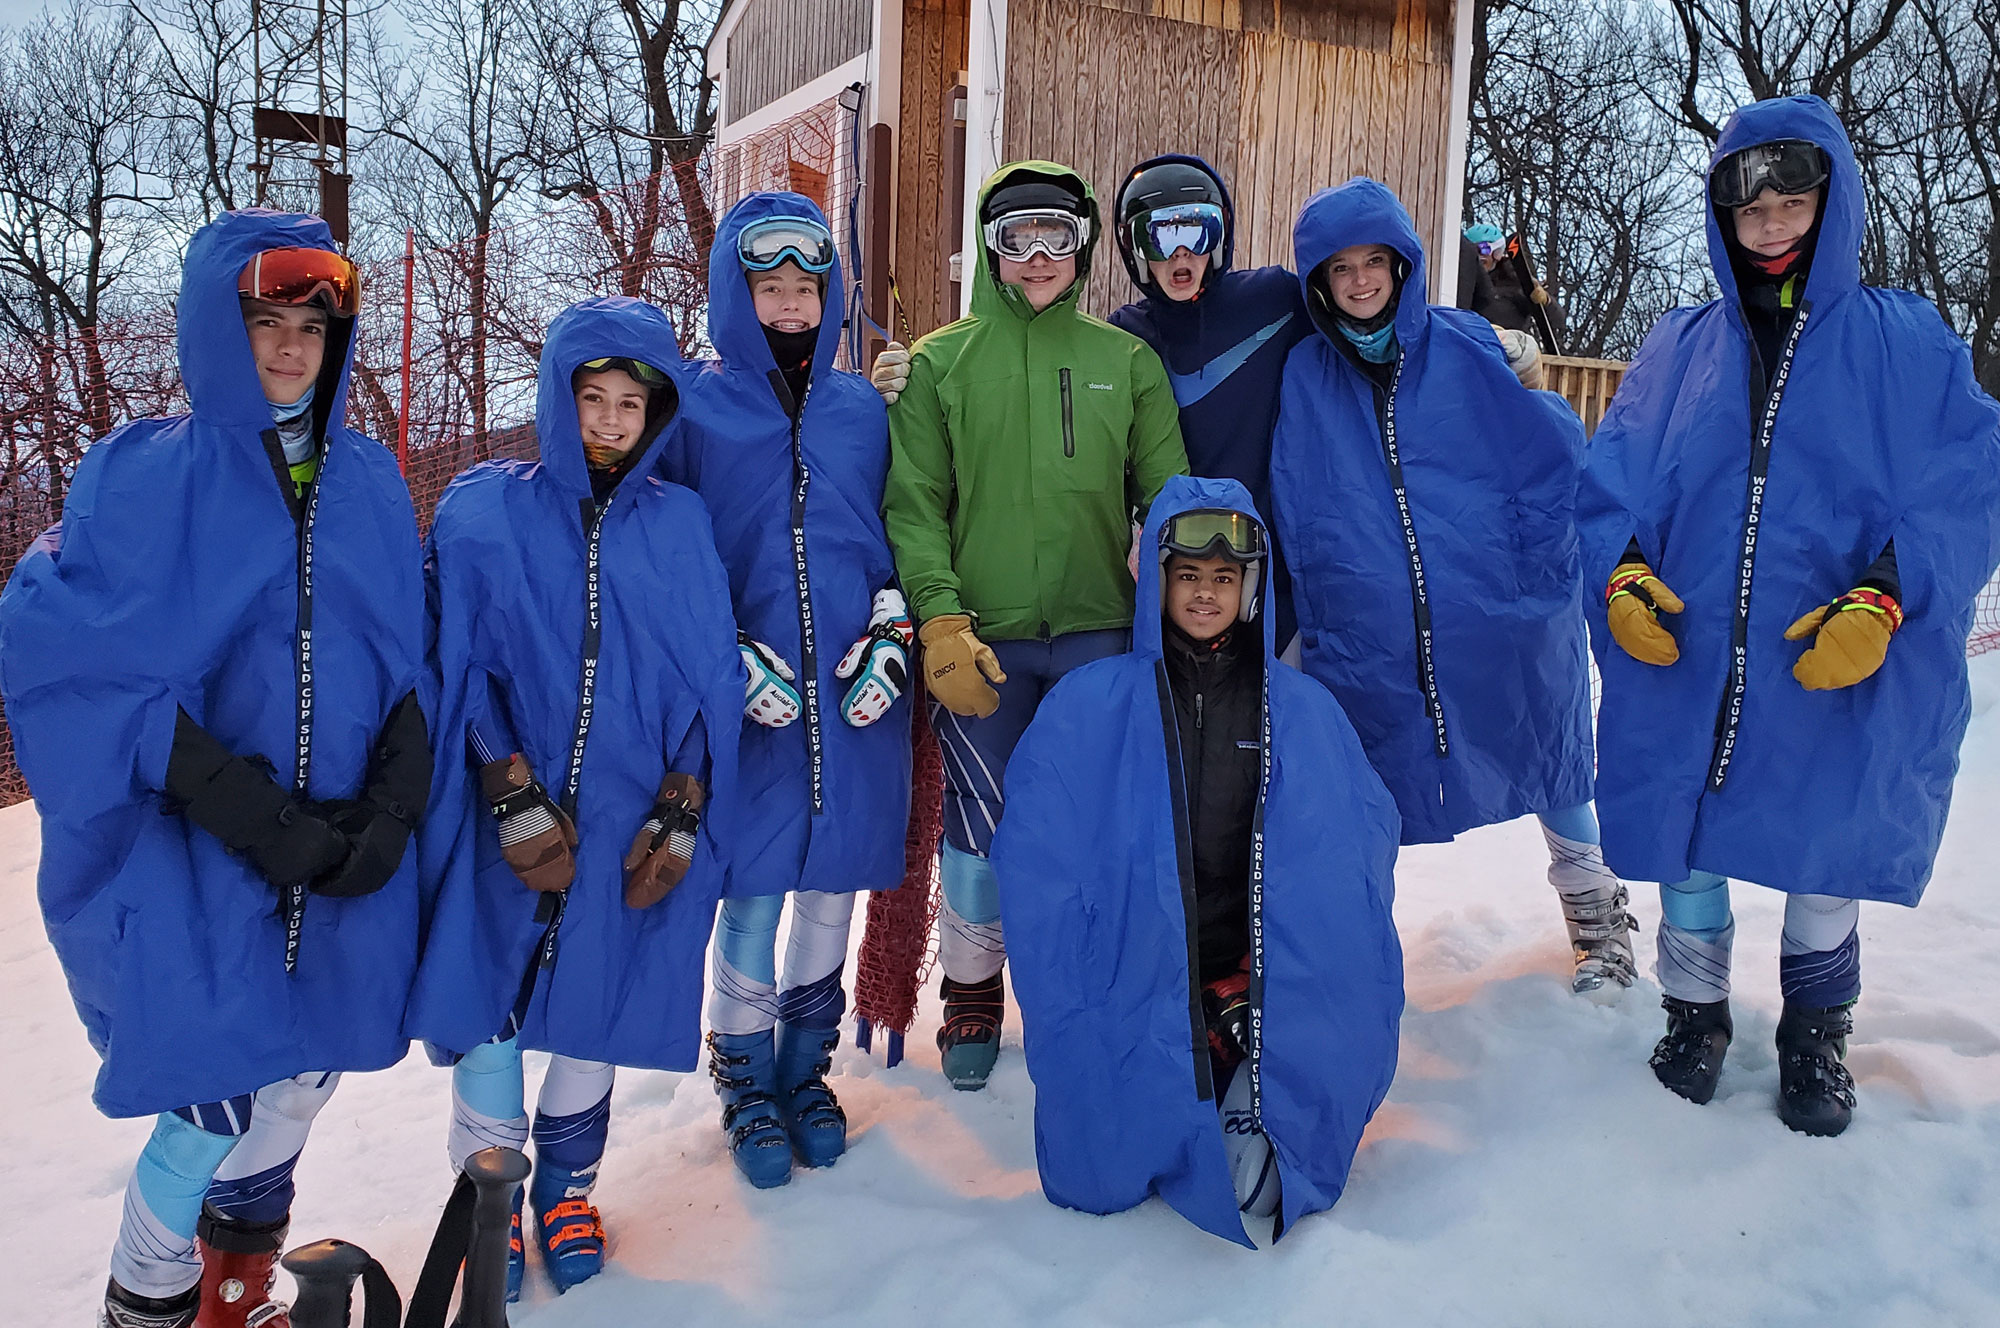 Skeleton Ski Team of 8 at GS #3